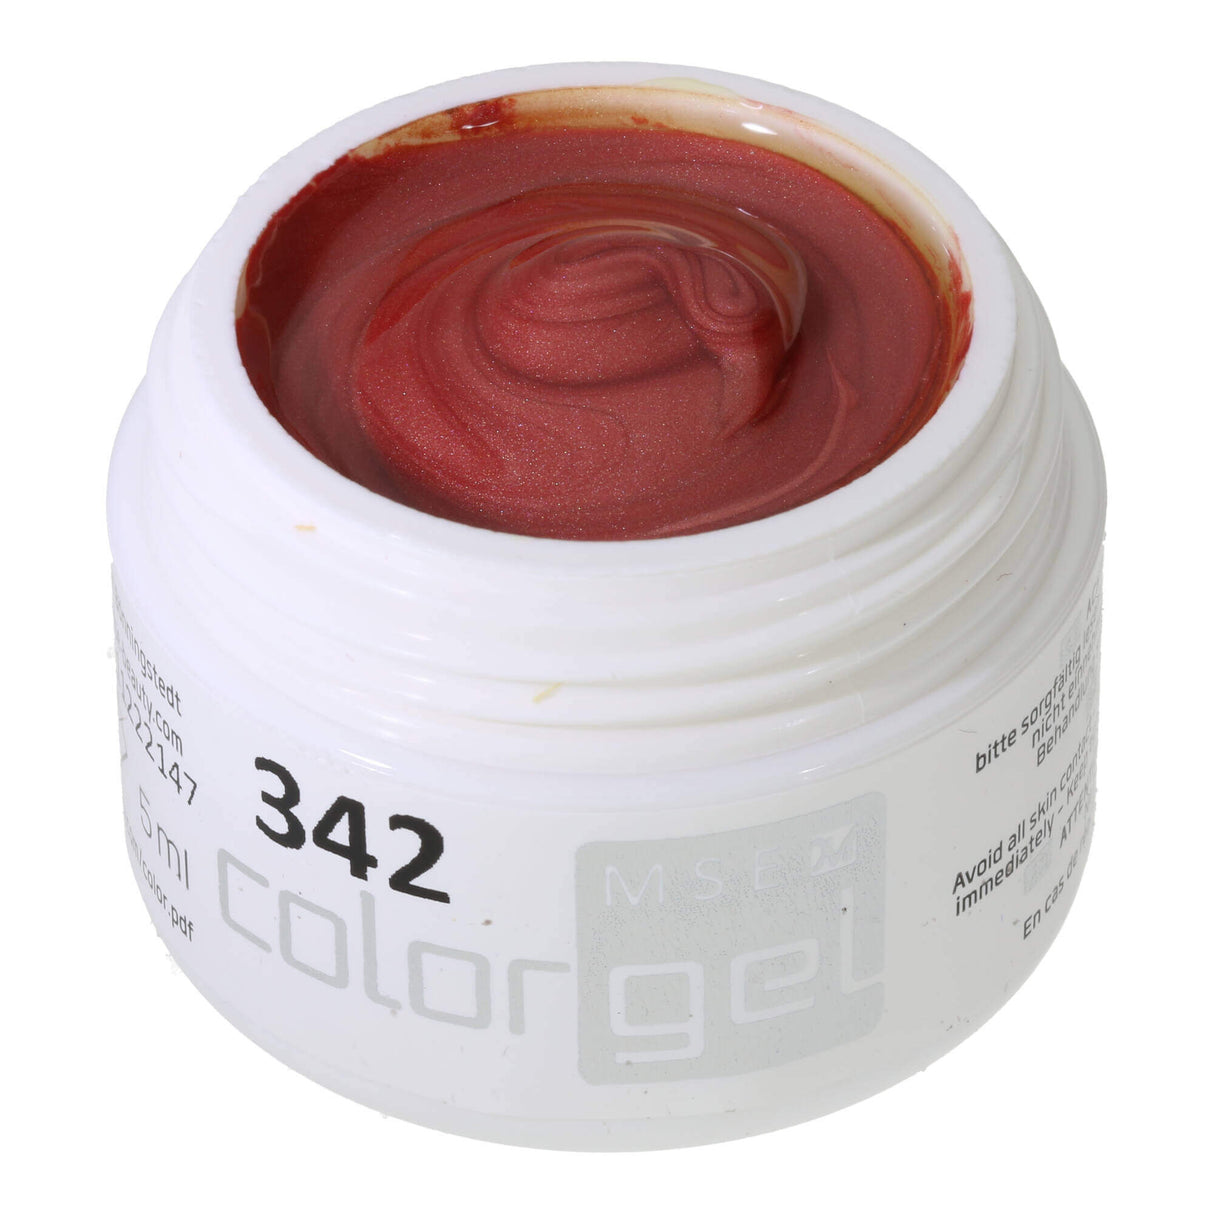 # 342 Premium-EFFEKT Color Gel 5ml Màu be-đỏ lung linh